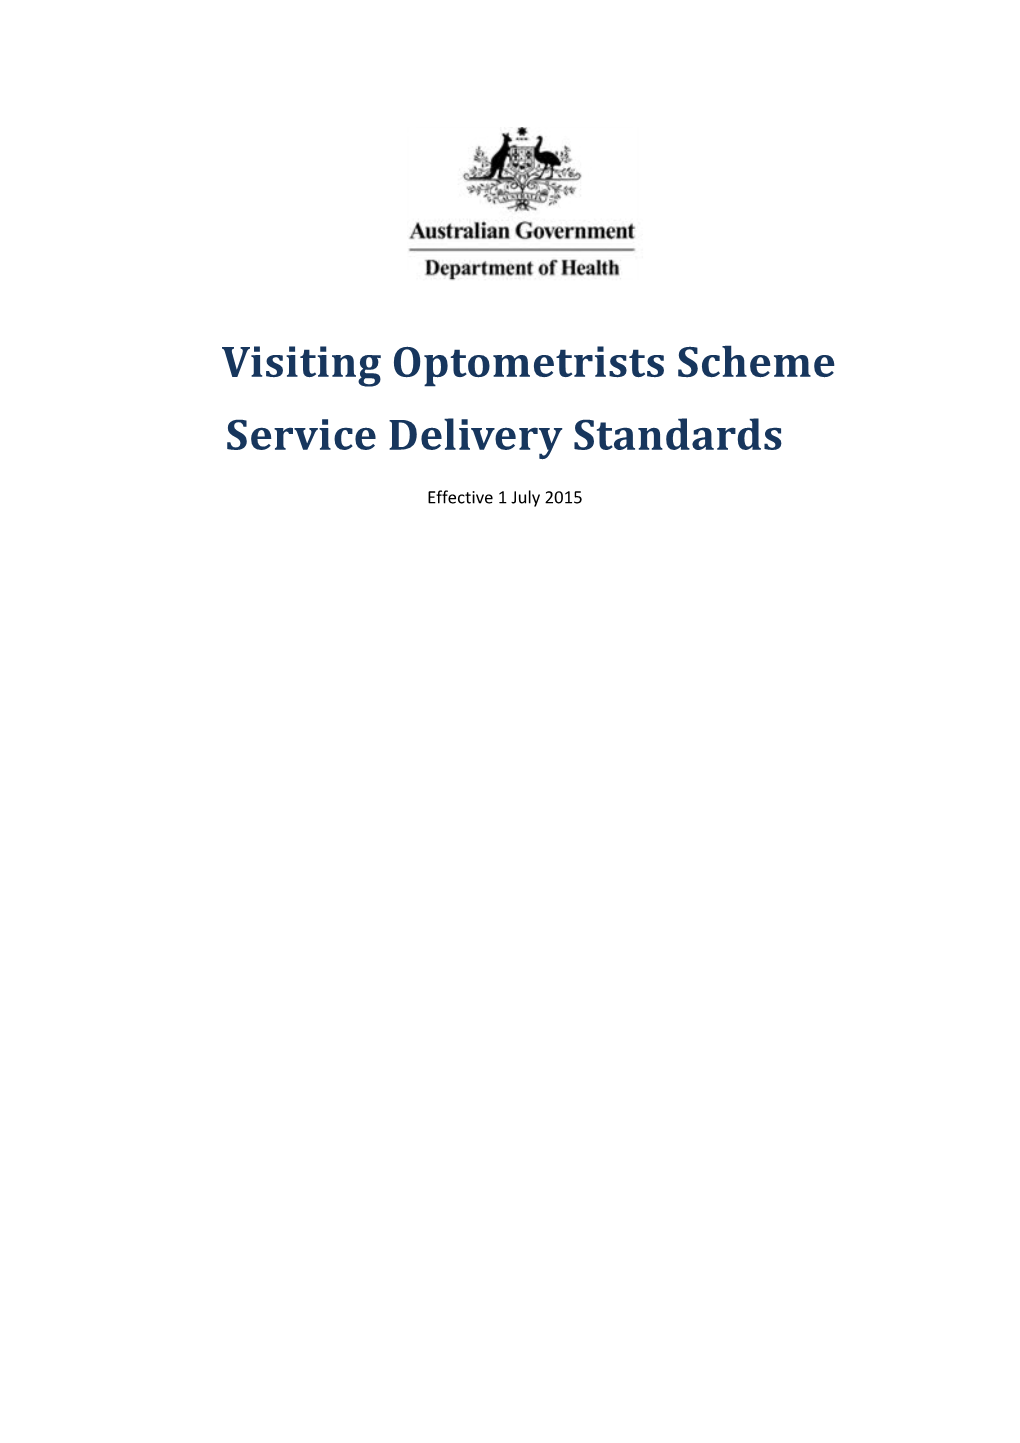 Visiting Optometrists Scheme Service Delivery Standards